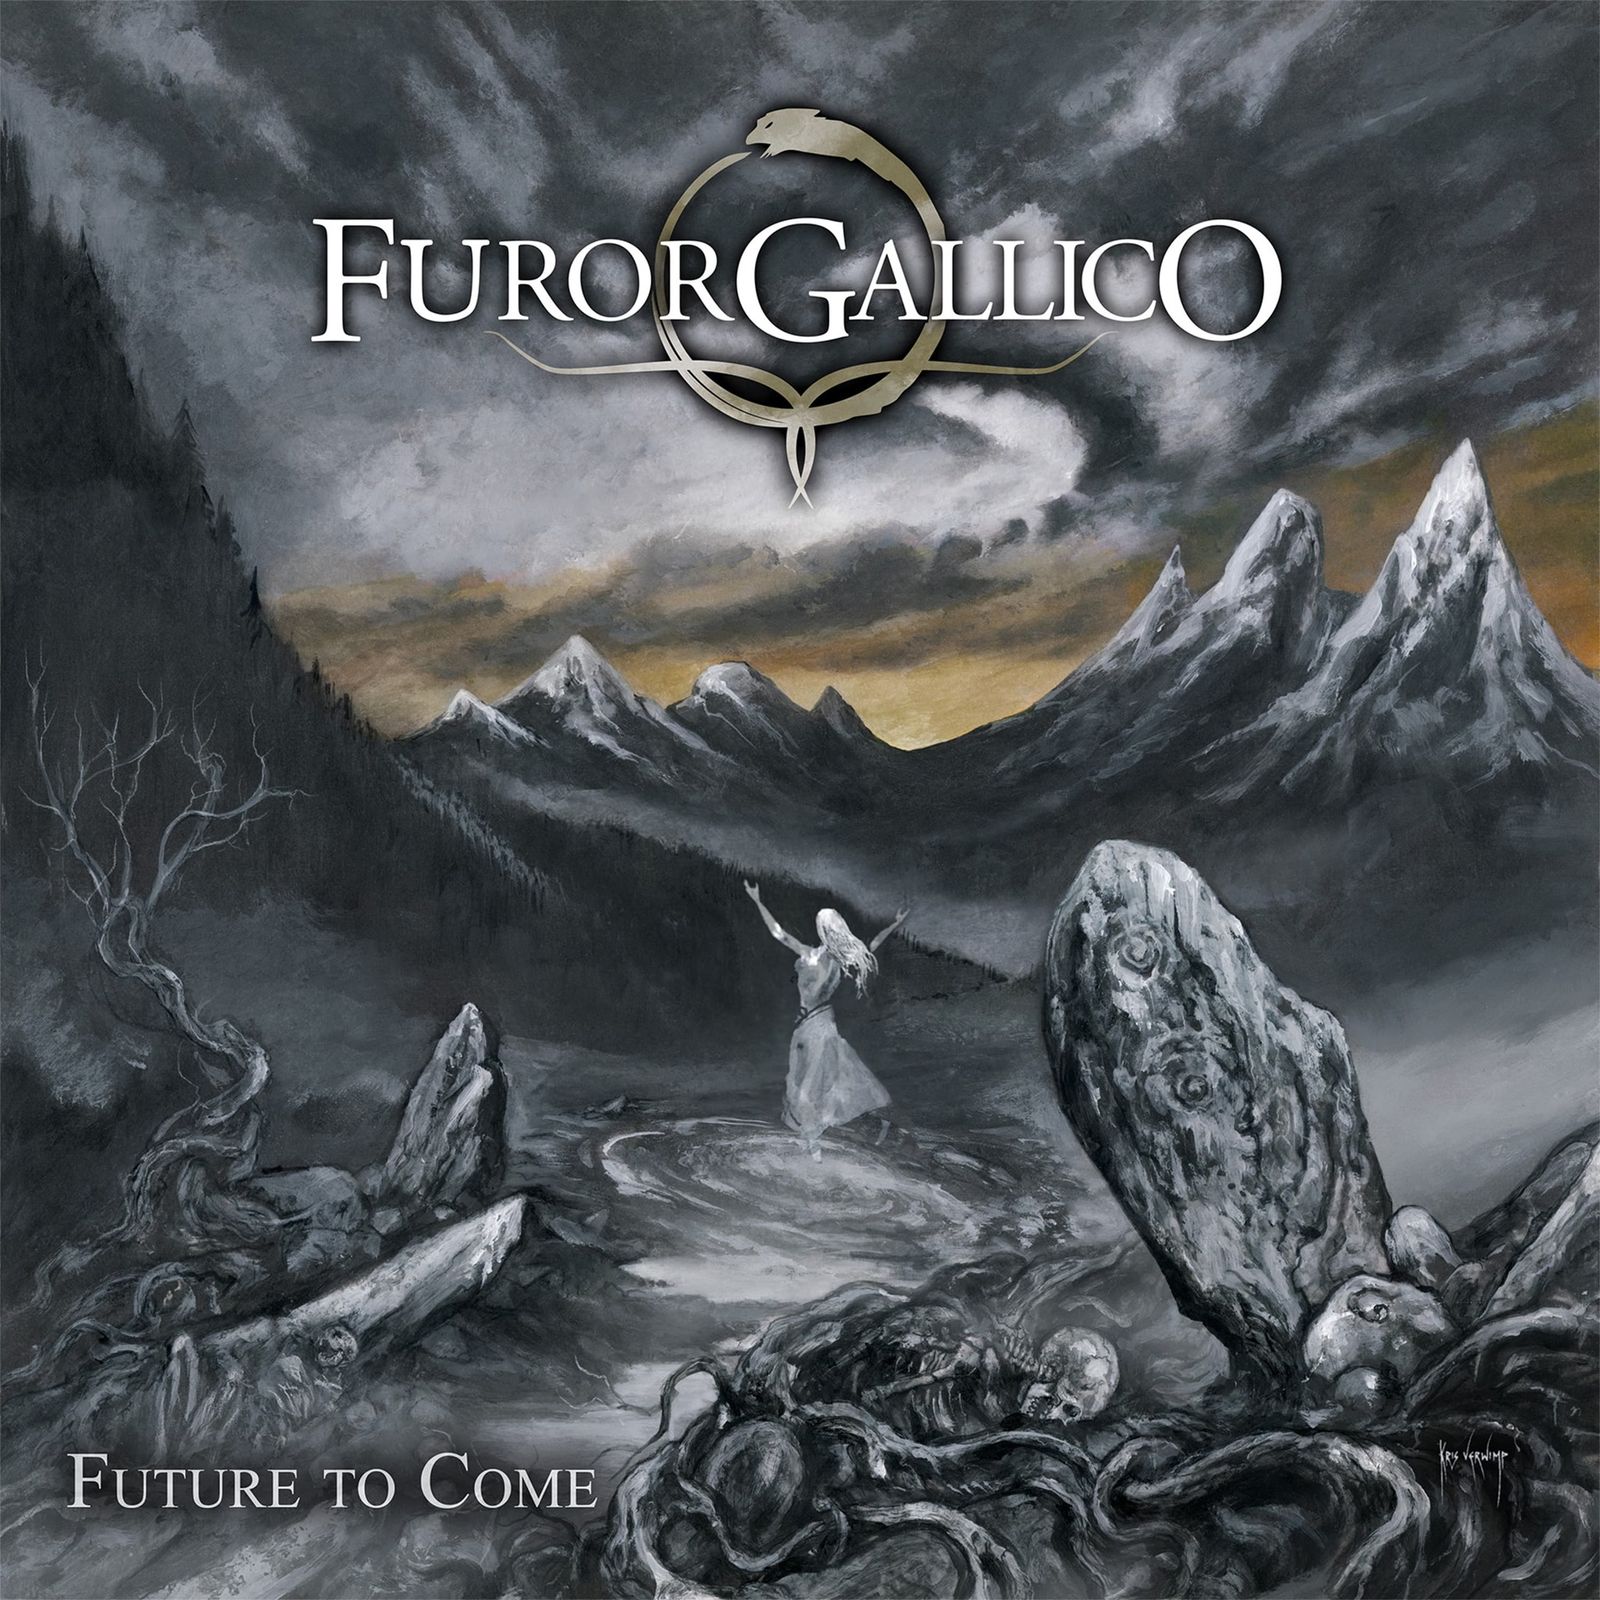 Furor Gallico - Among the Ashes (lyric video)